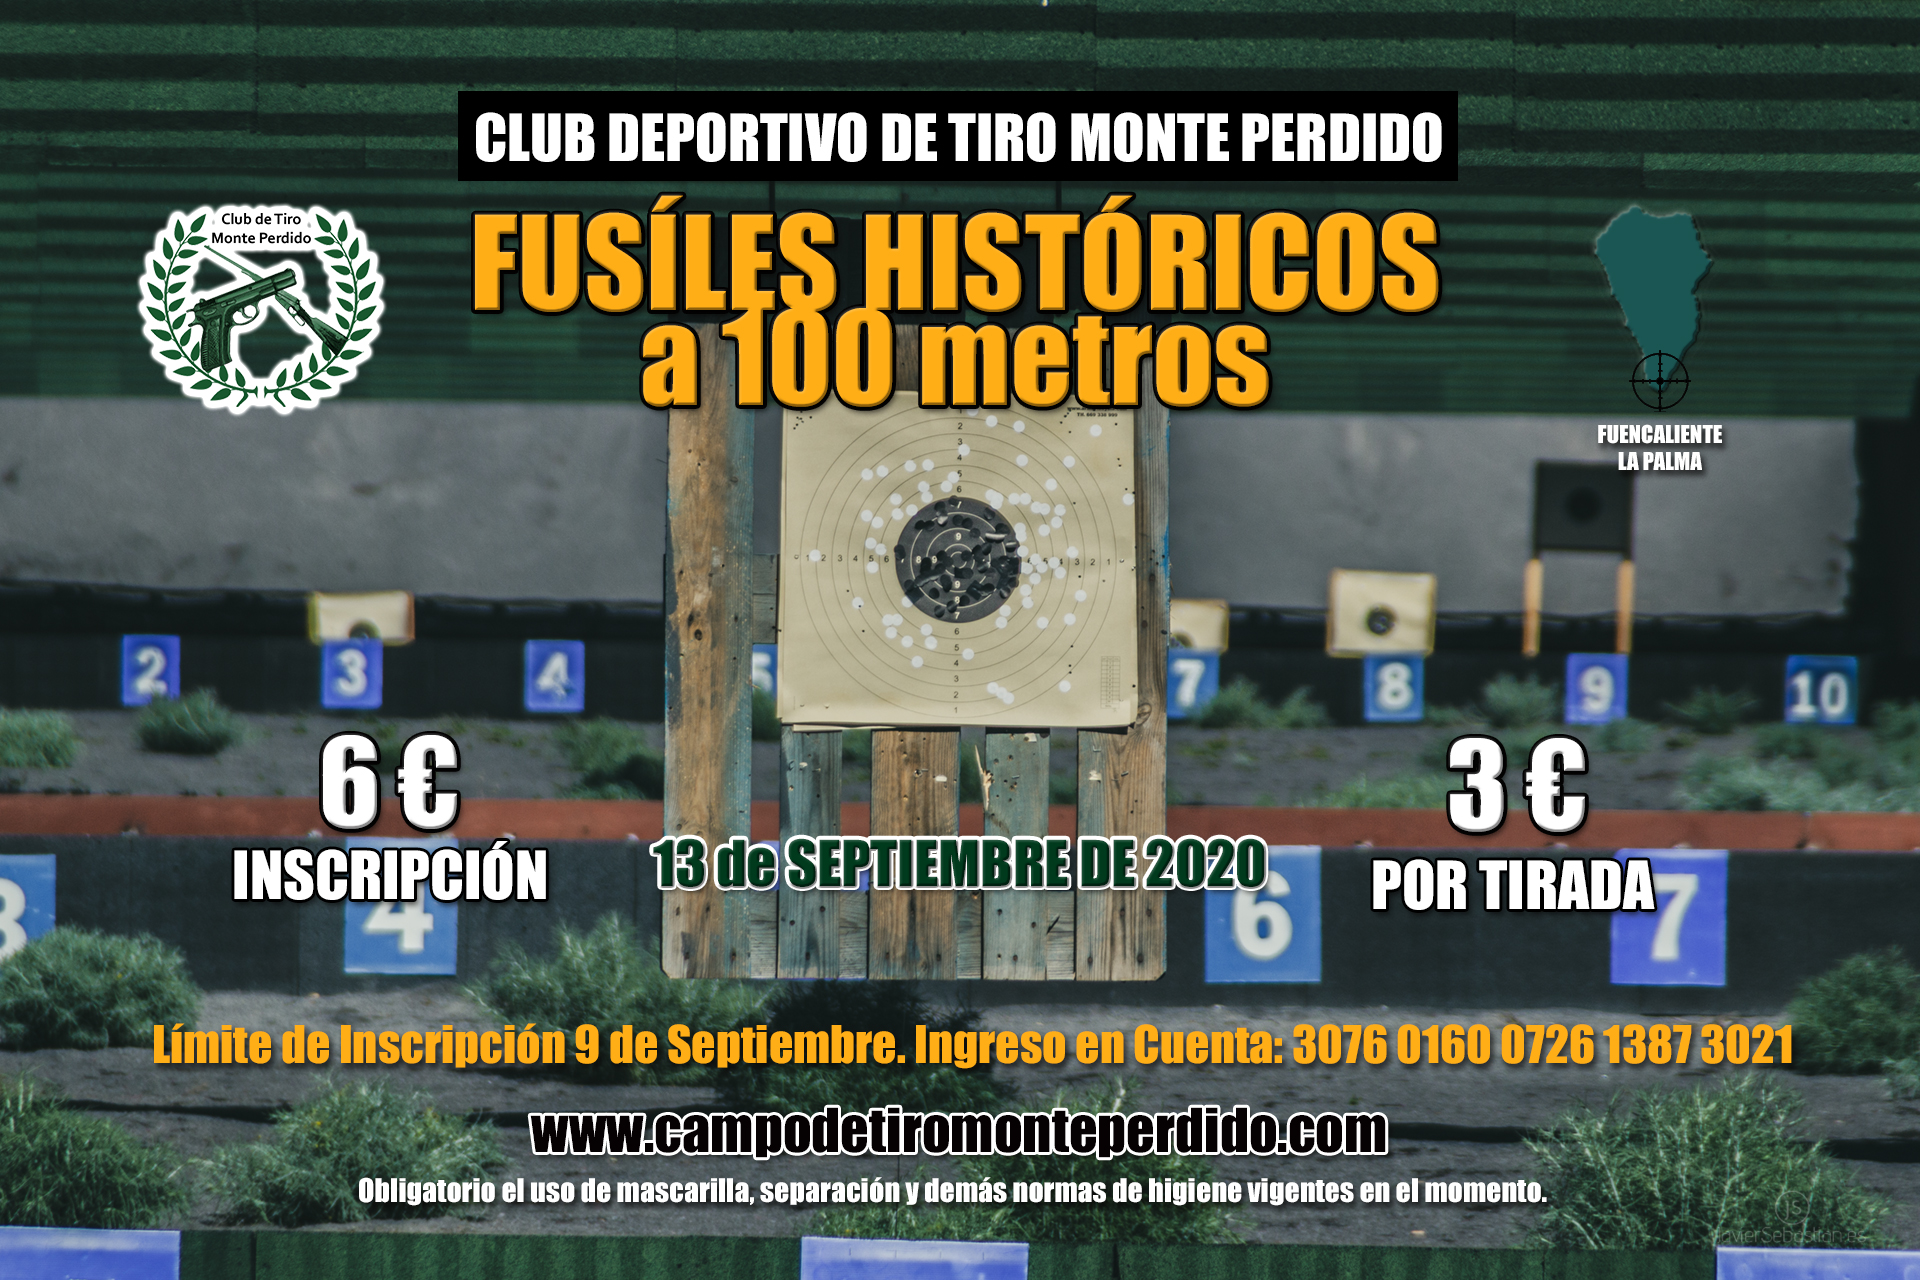 Fusiles Históricos a 100 metros. 13 de Septiembre 2020 · Club Deportivo de Tiro Monte Perdido · Fuencaliente La Palma